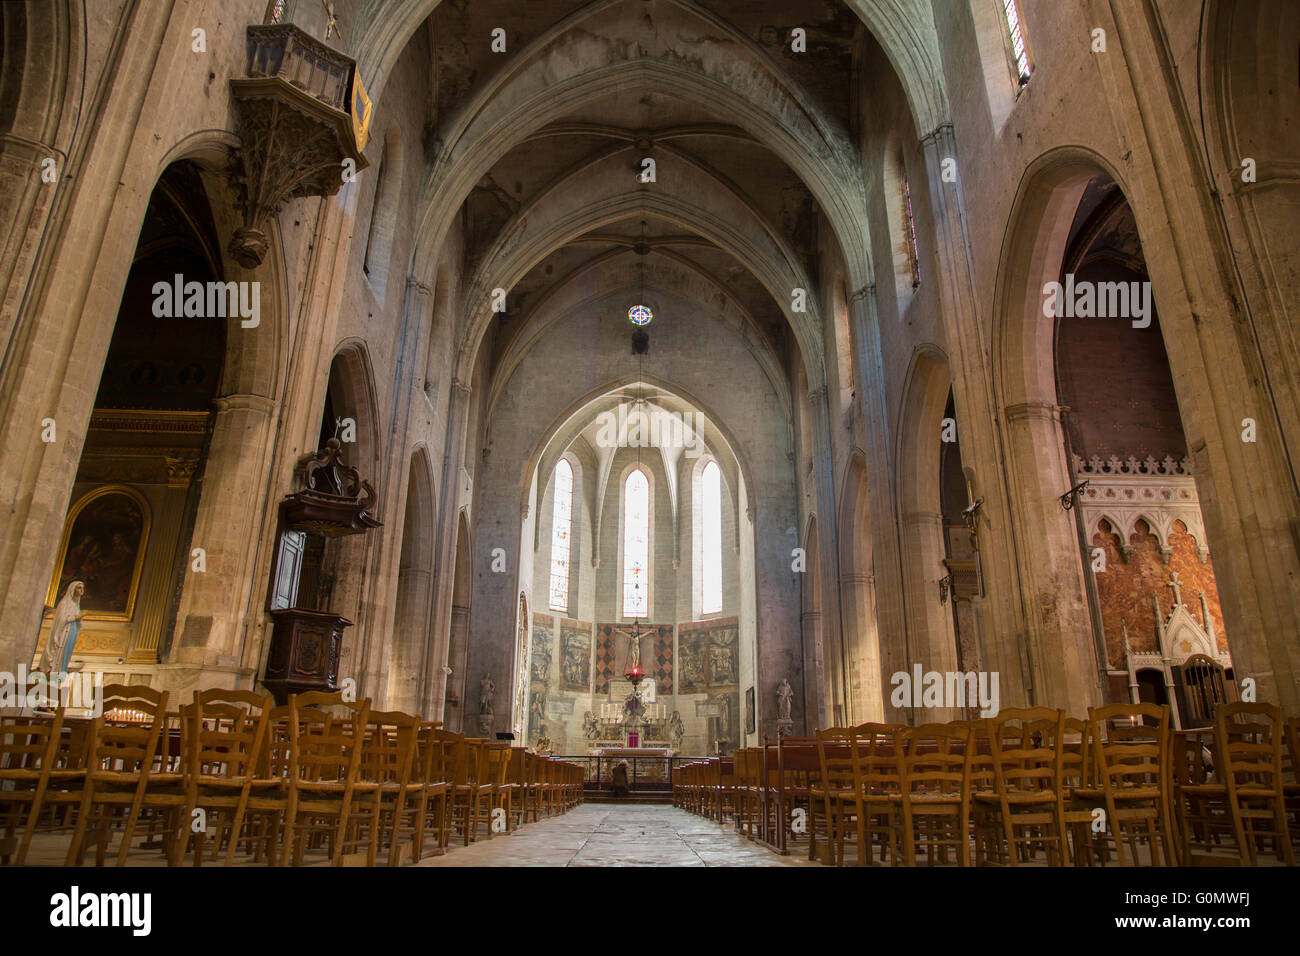 Interior of St Didier Church, Avignon, France, Europe Stock Photo